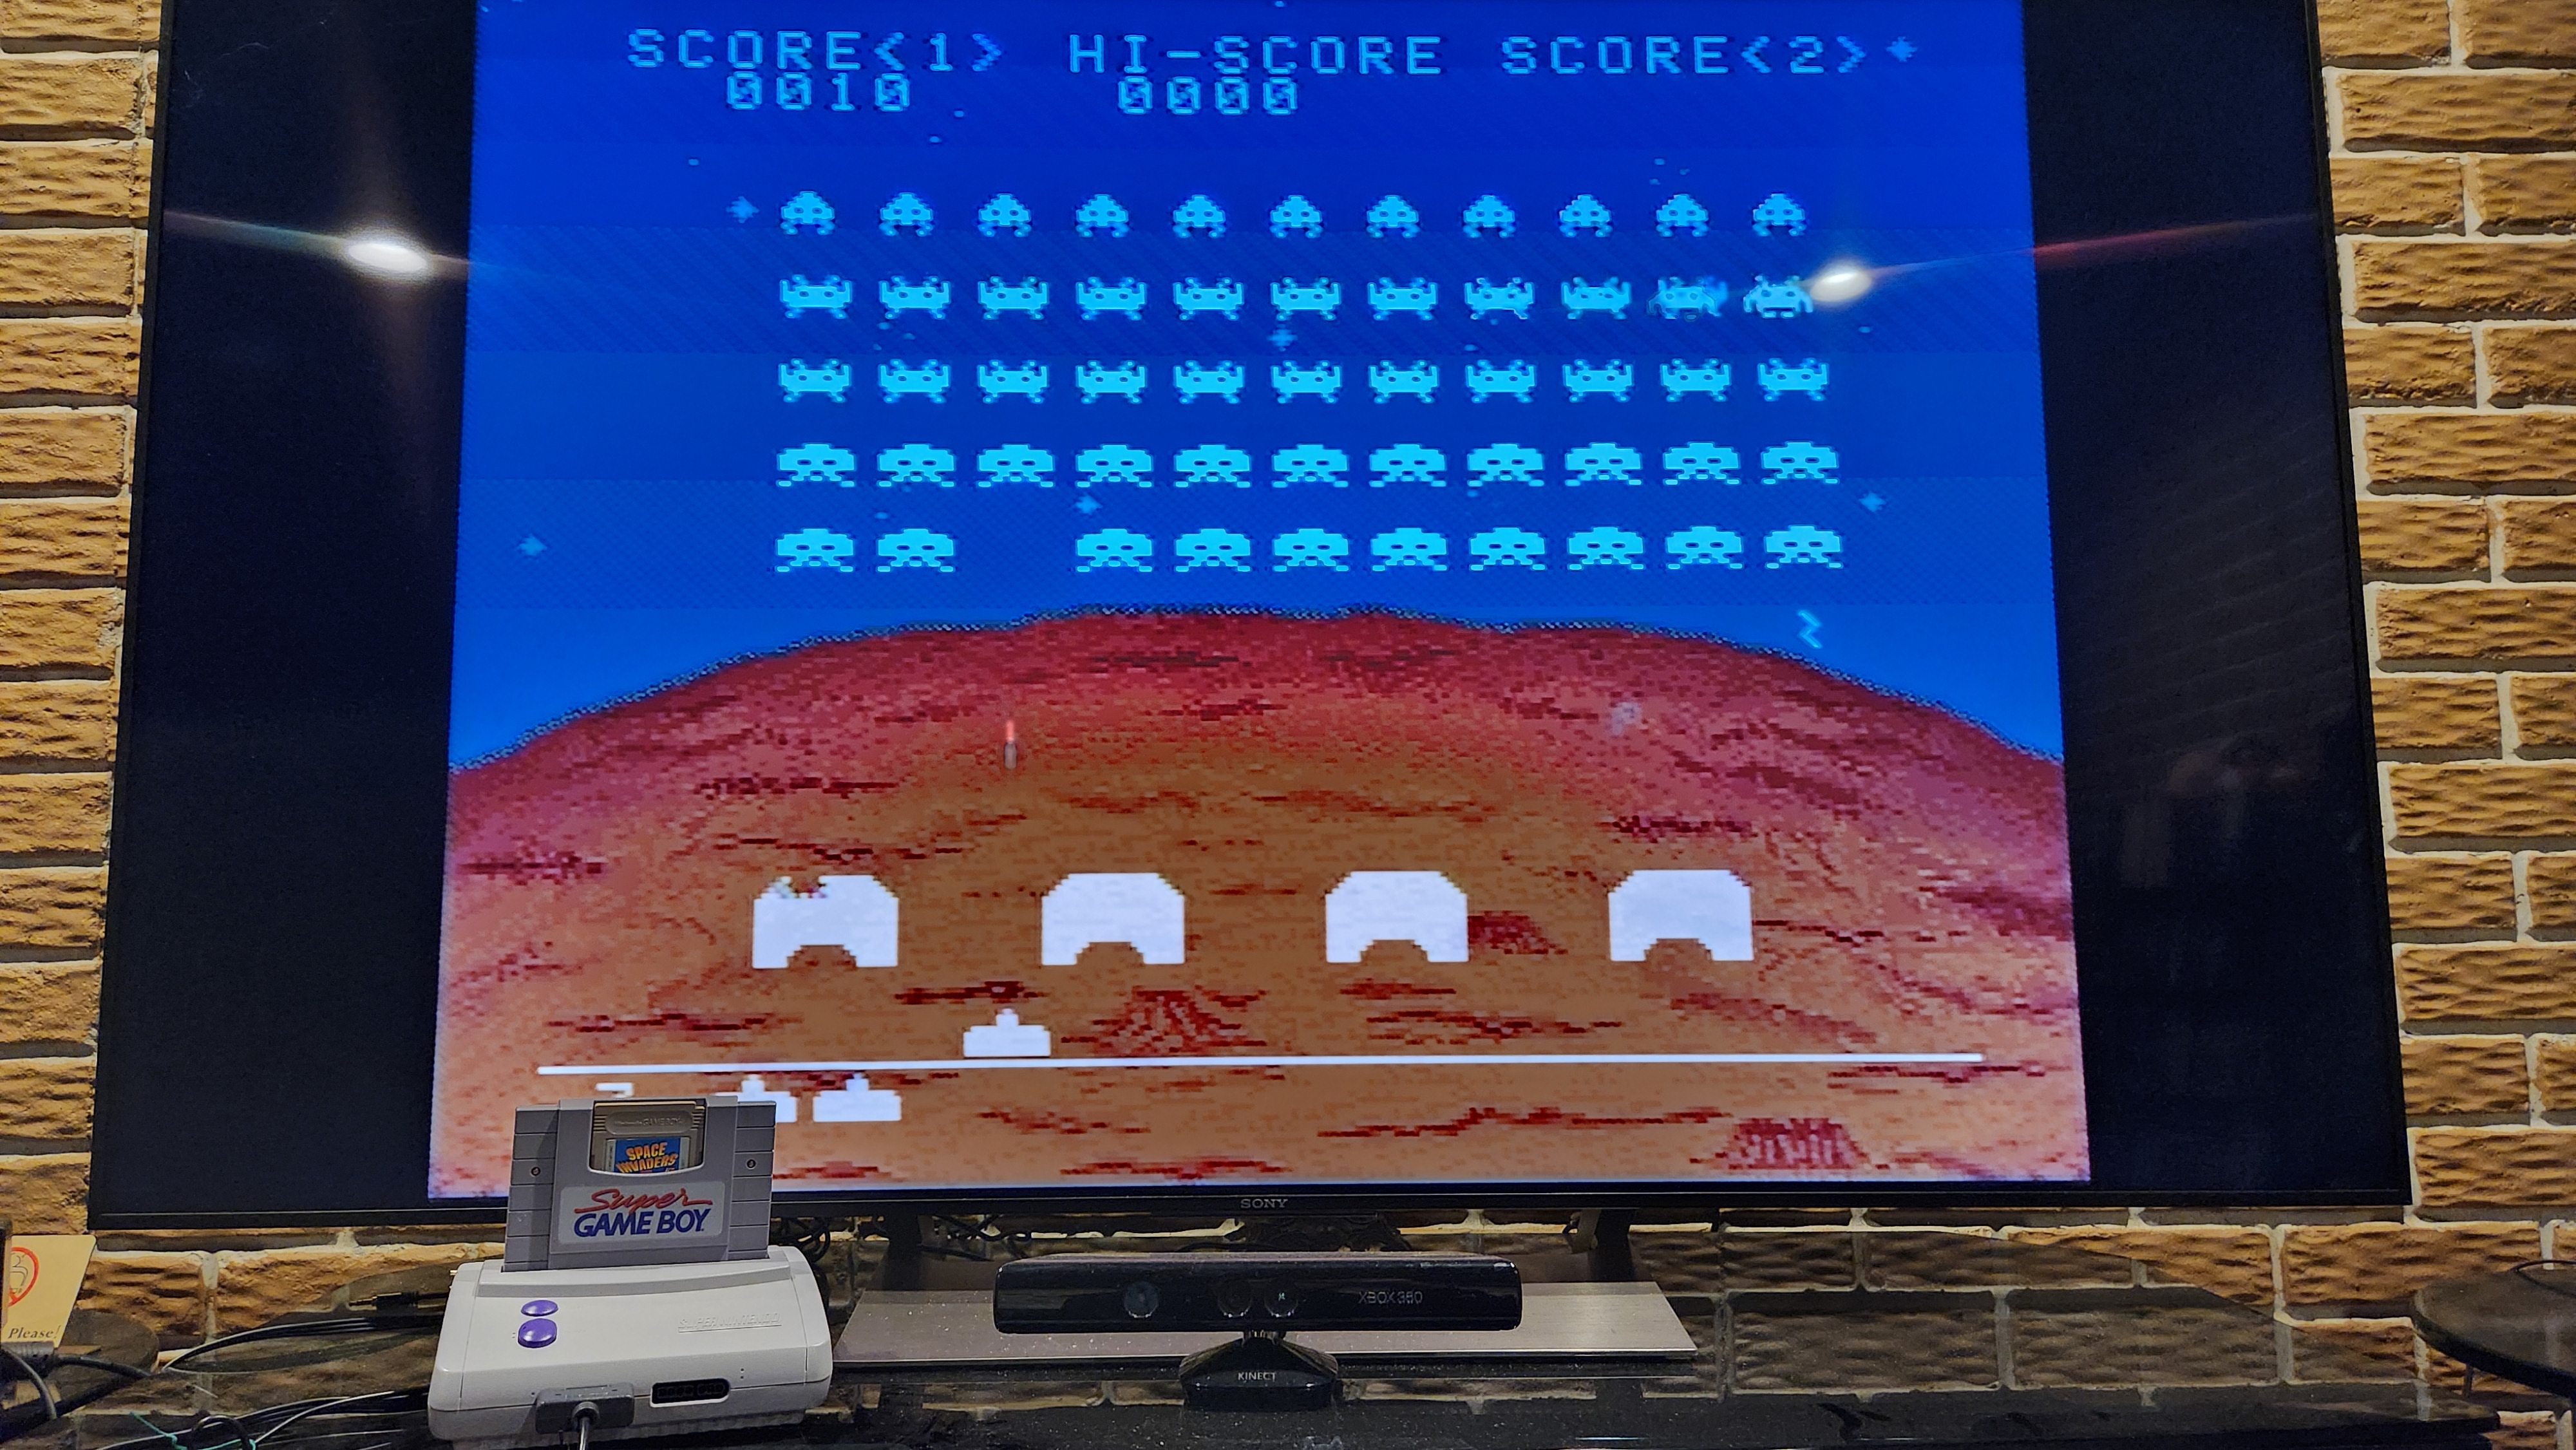 Space Invaders Arcade running in Super Nintendo mode